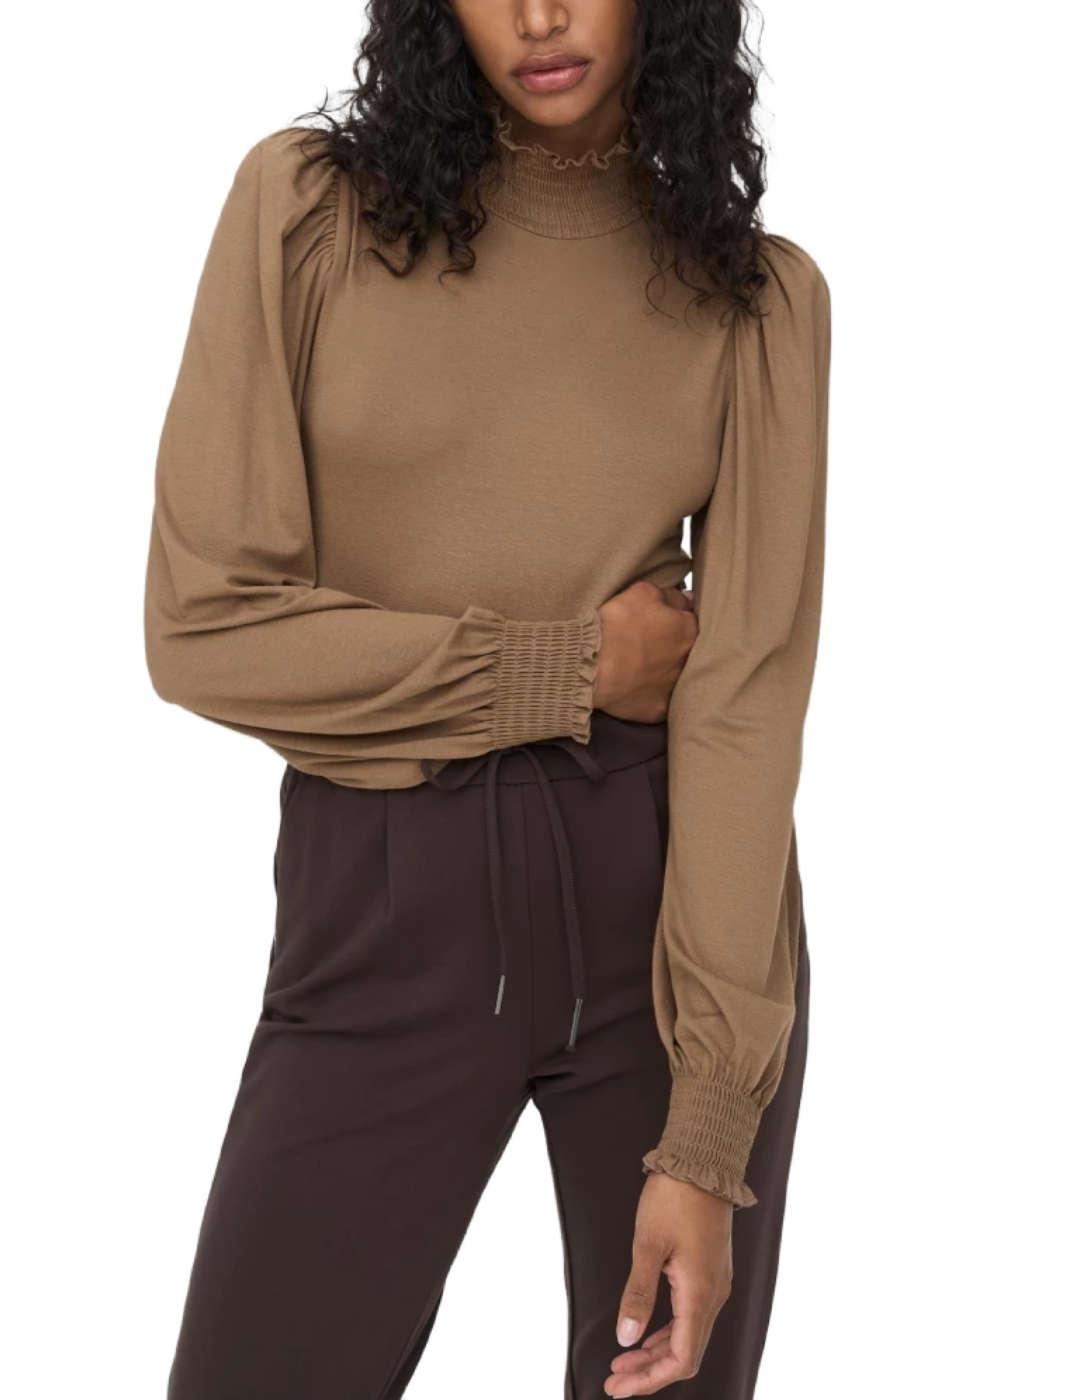 Camiseta Only Elva marrón cuello alto manga larga para mujer